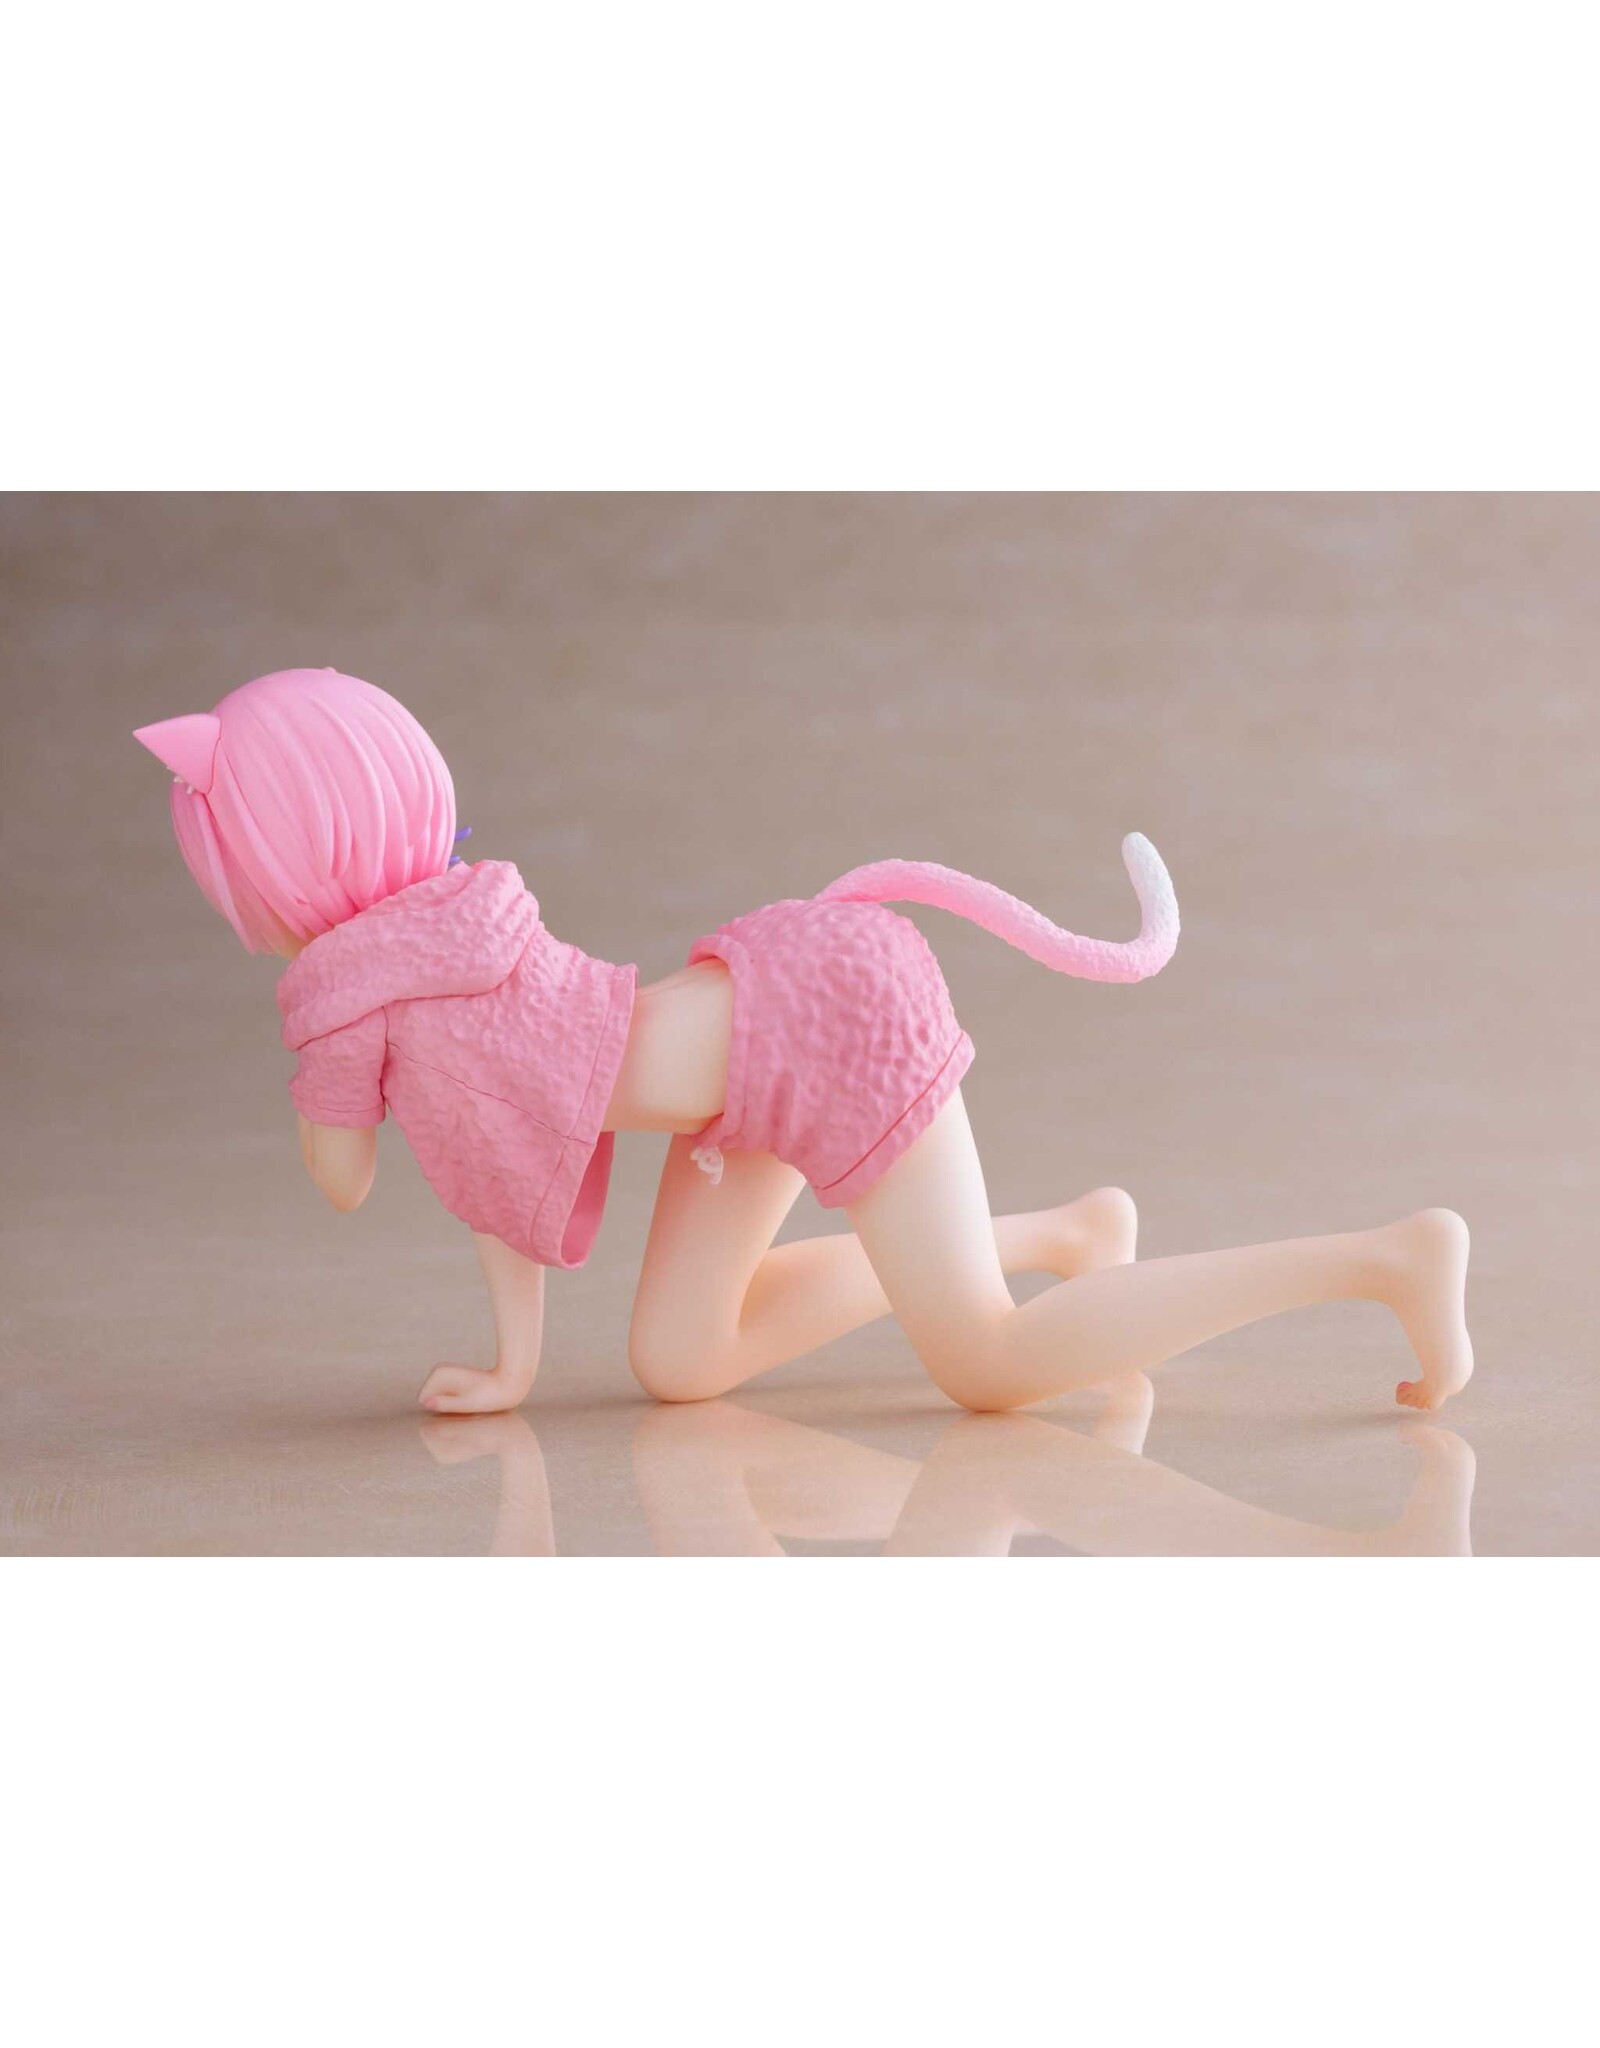 Re:Zero Starting Life in Another World - Desktop Cute Ram (Cat Roomwear Ver.) - PVC Figure - 13 cm